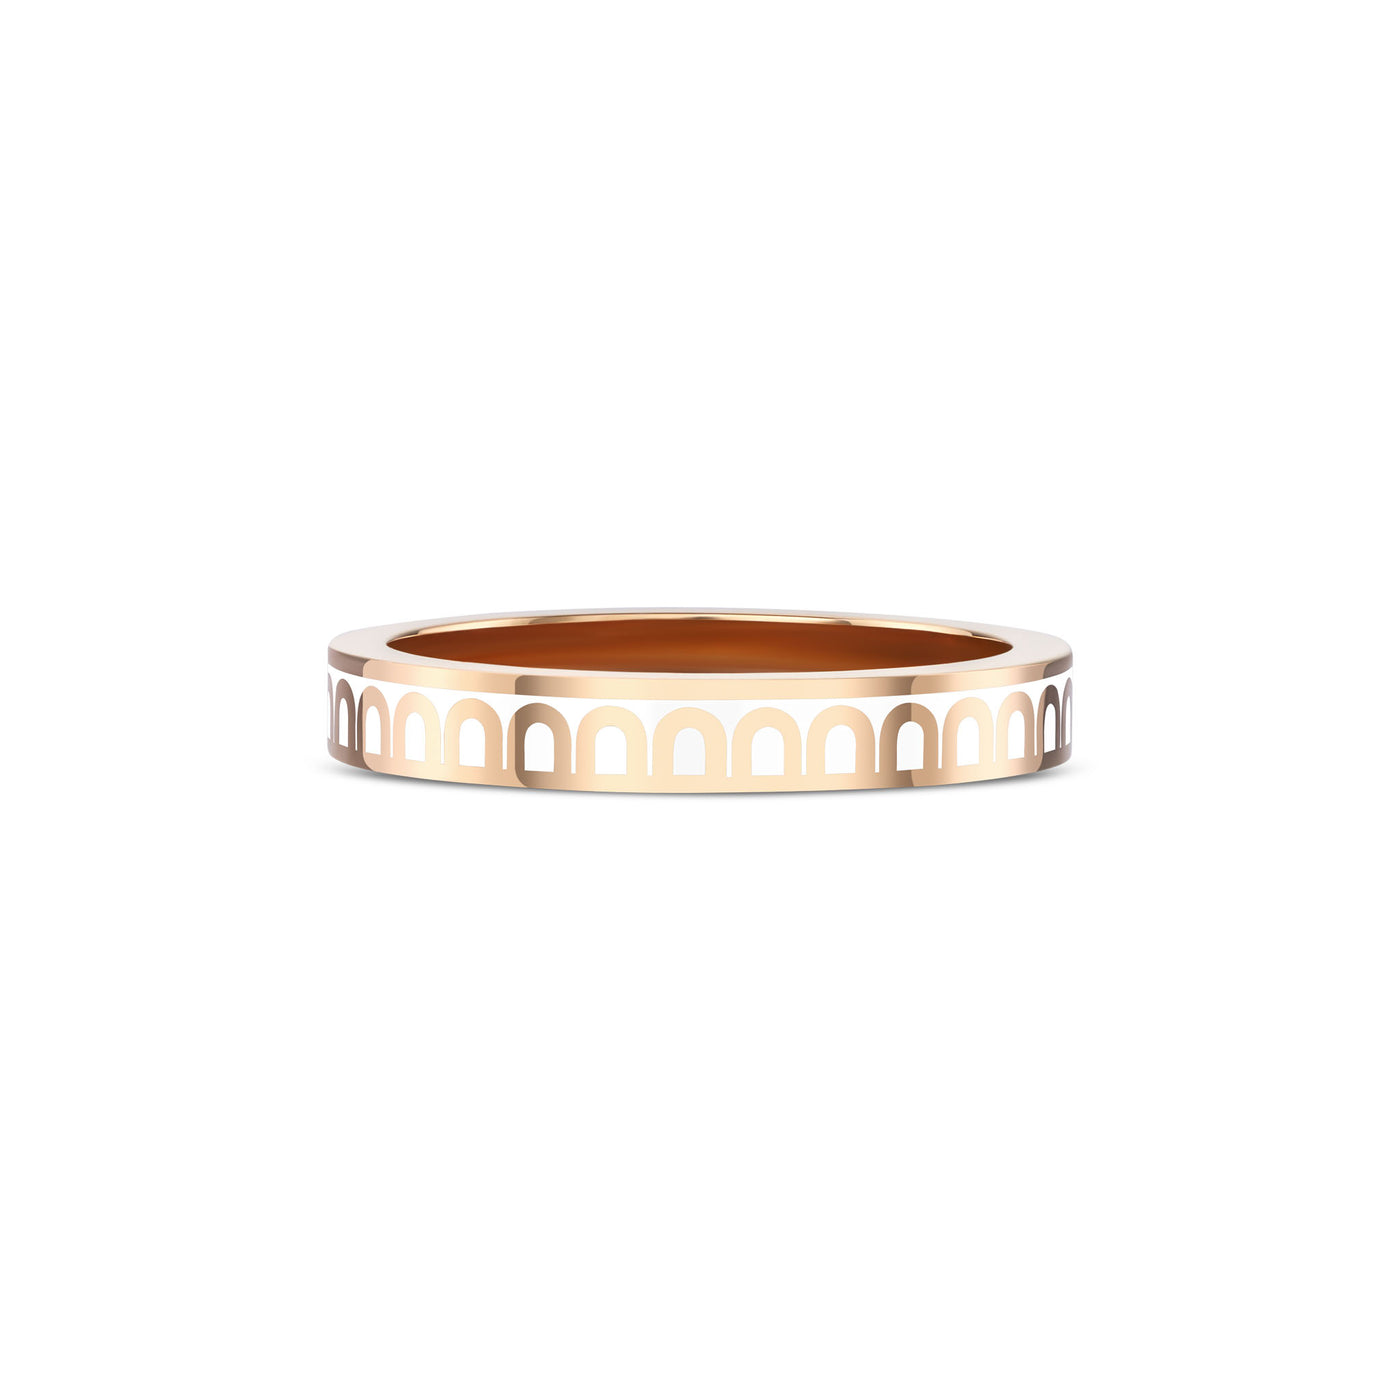 L'Arc de DAVIDOR Ring PM, 18k Rose Gold with Neige Lacquered Ceramic - DAVIDOR